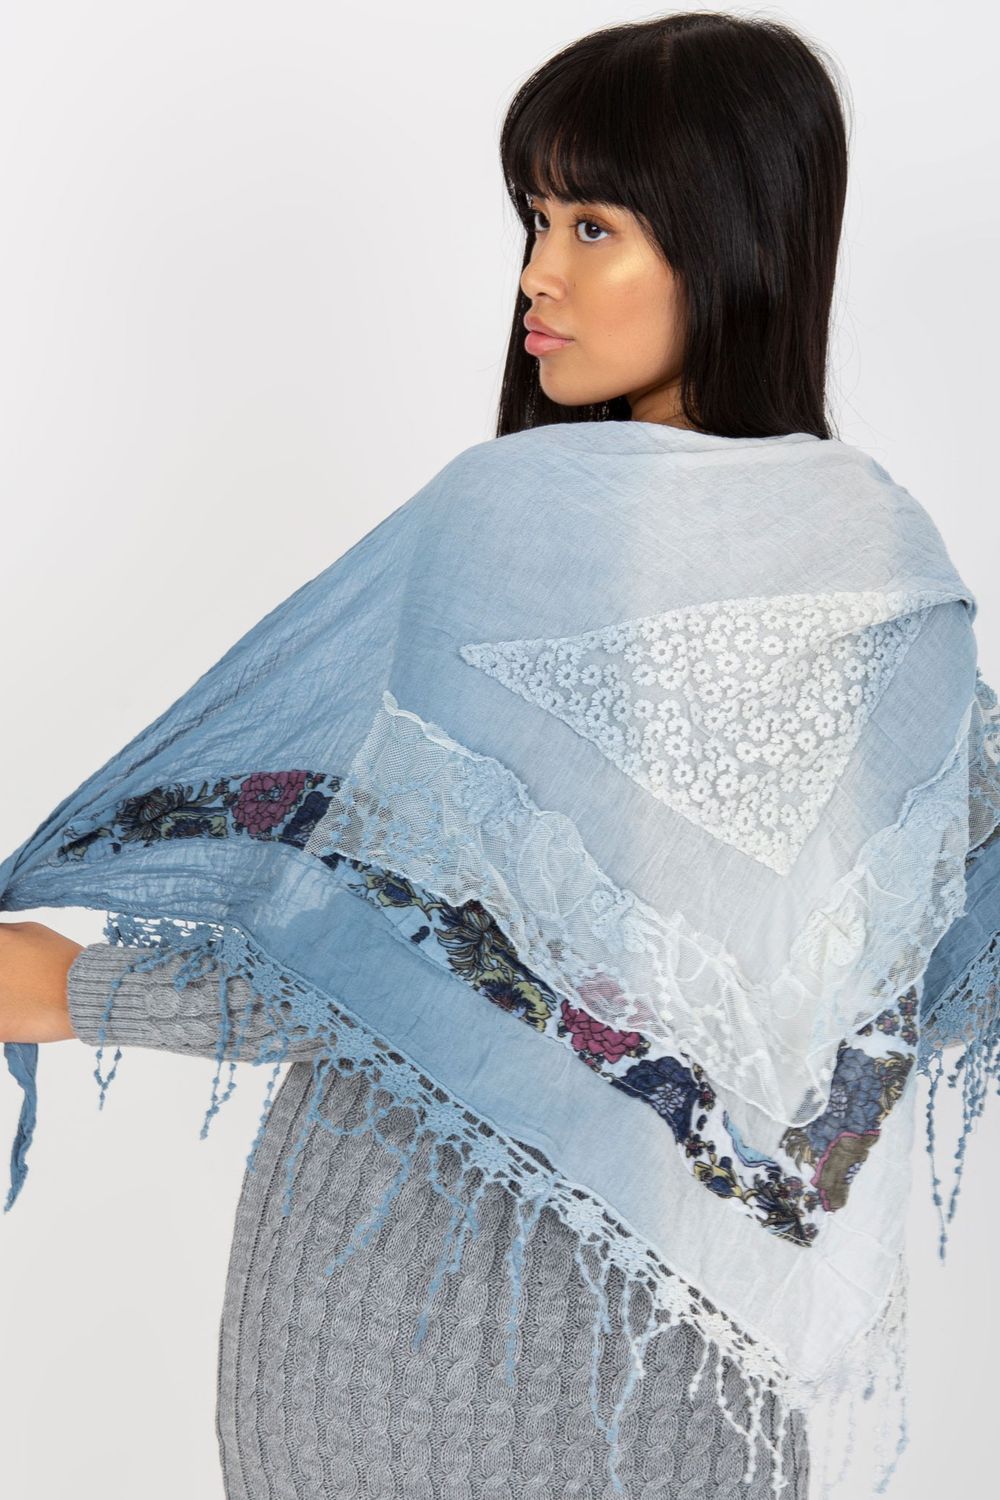 Neckerchief model 171776 Elsy Style Wraps, Scarves, Shawls for Women